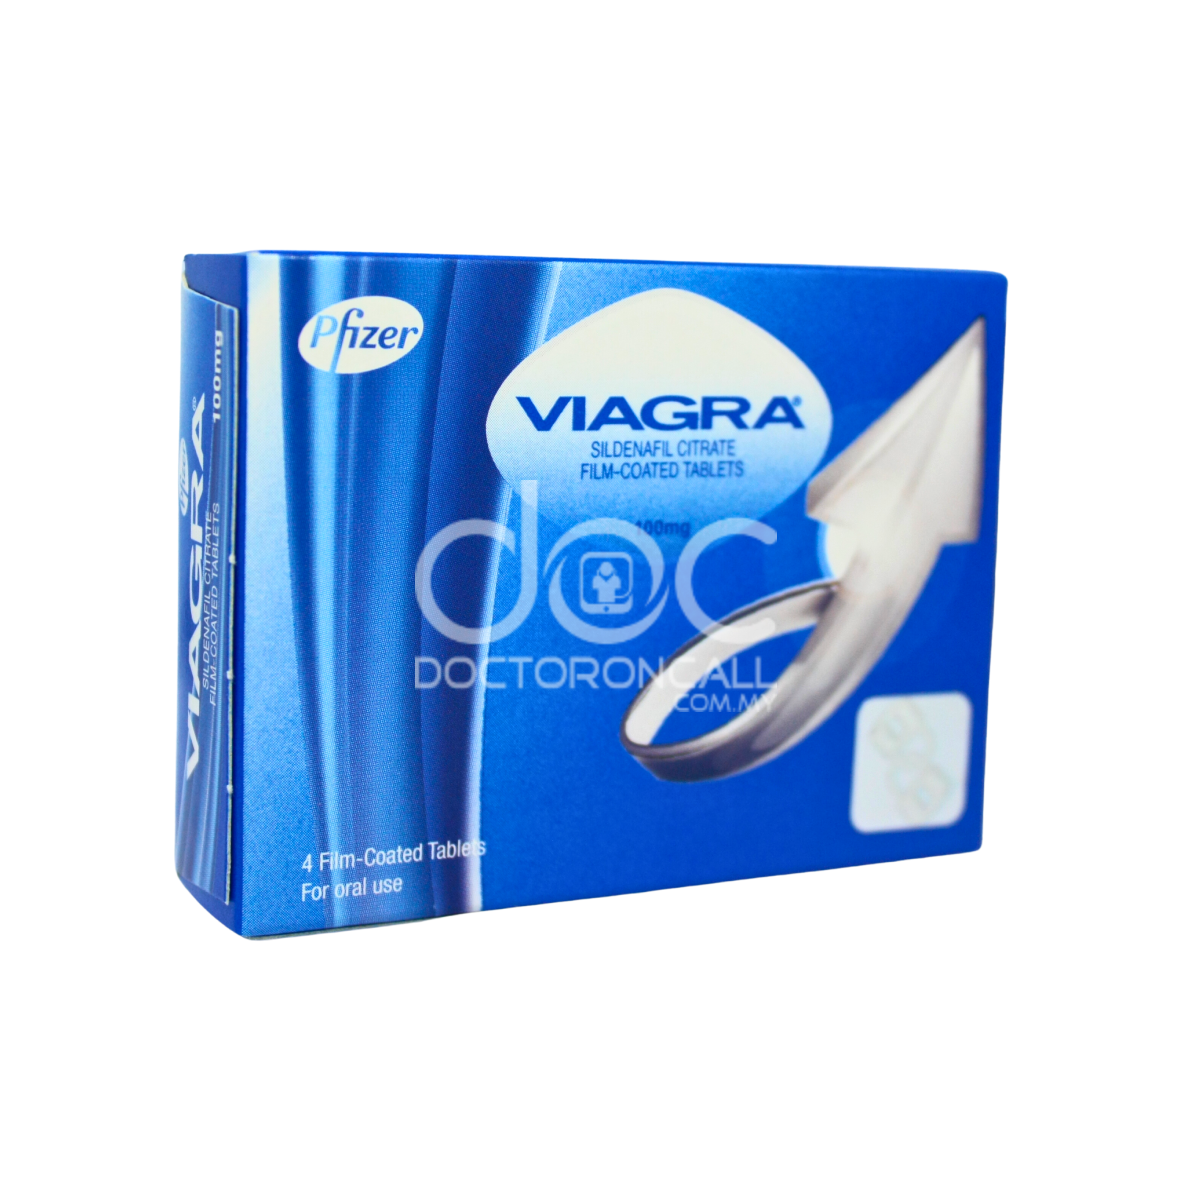 Viagra 100mg Tablet-Bergejala Mati Pucuk